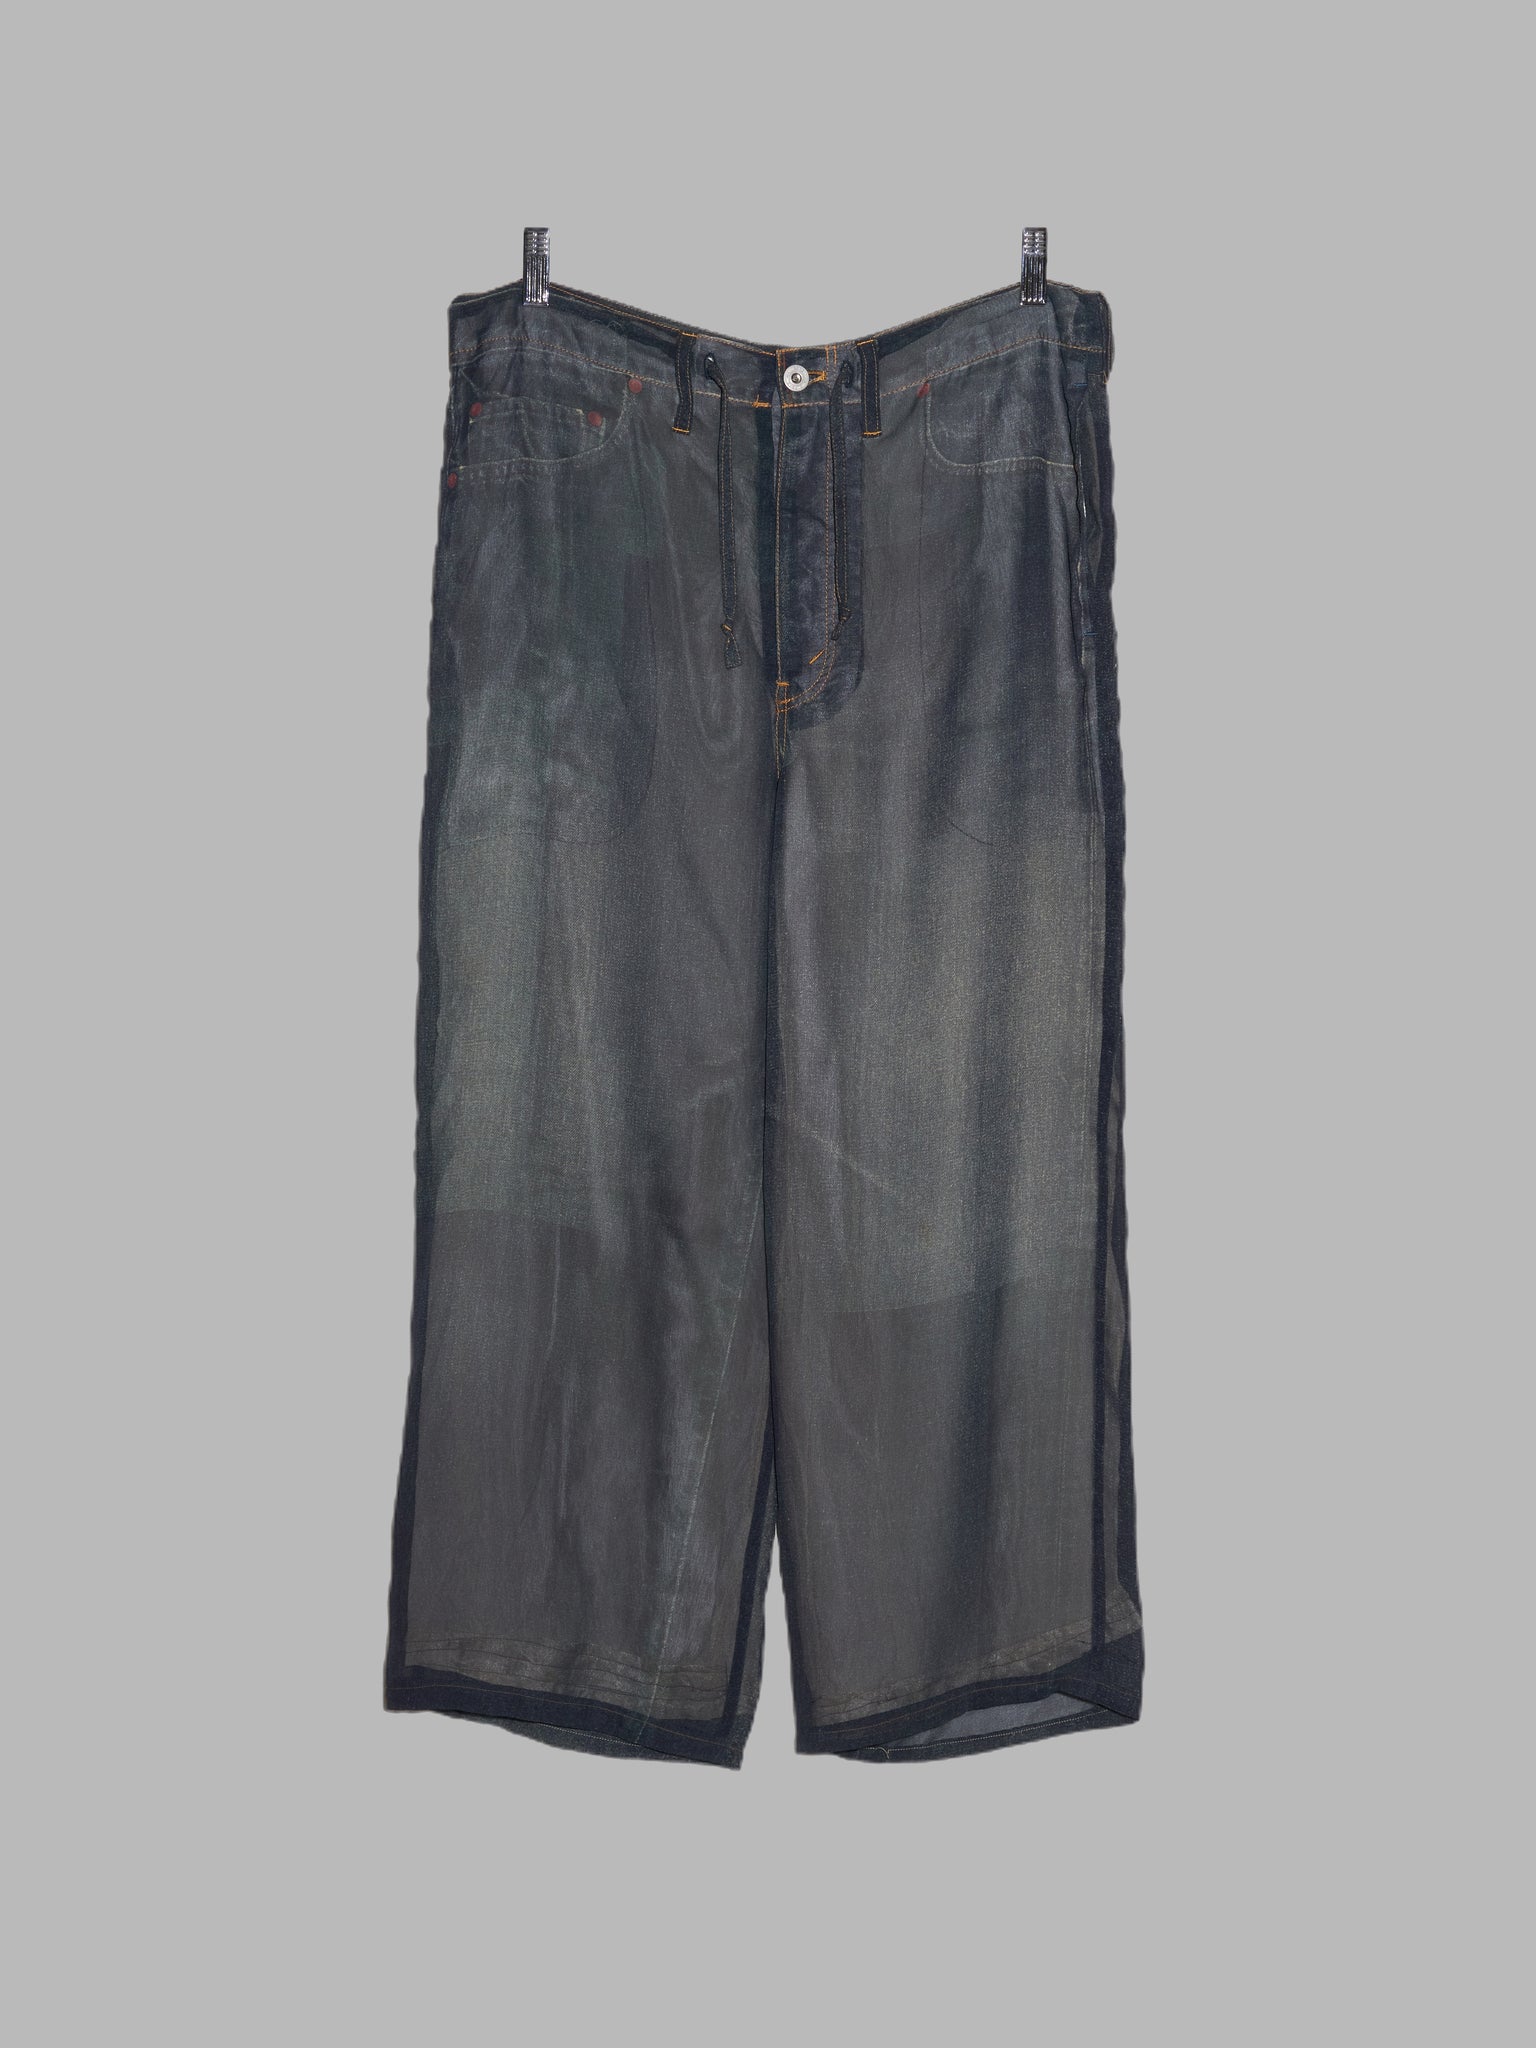 Nicole Club grey blue polyester denim jeans print wide leg trousers